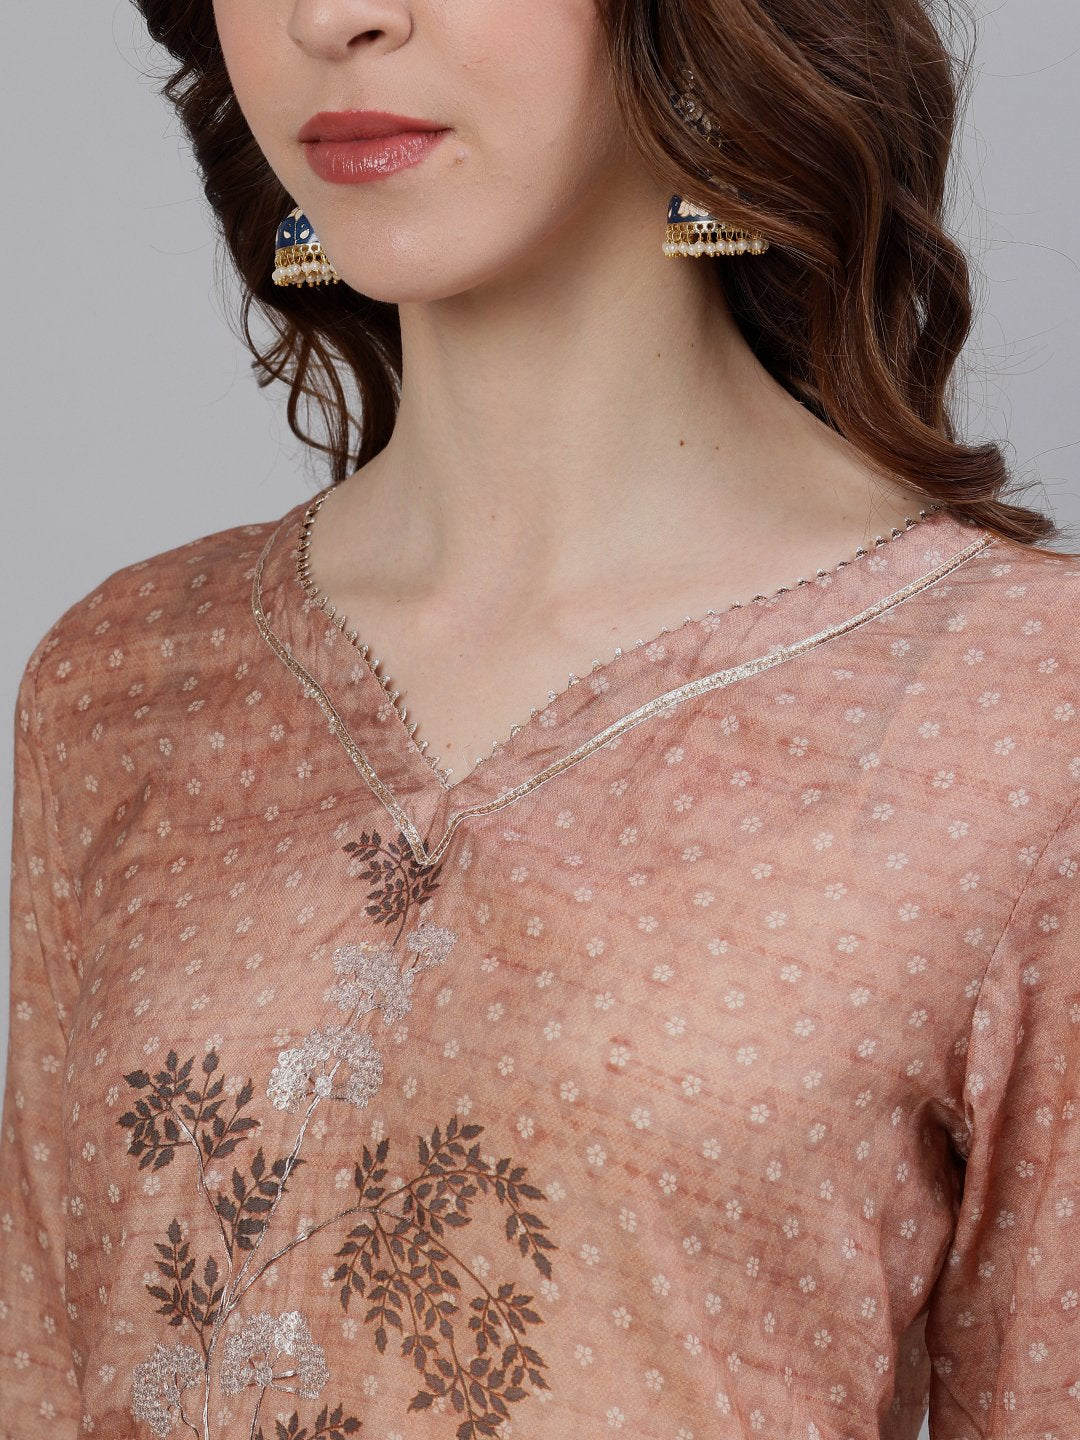 Ishin Women's Silk Brown Zari Embroidered A-Line Kurta Trouser Dupatta Set